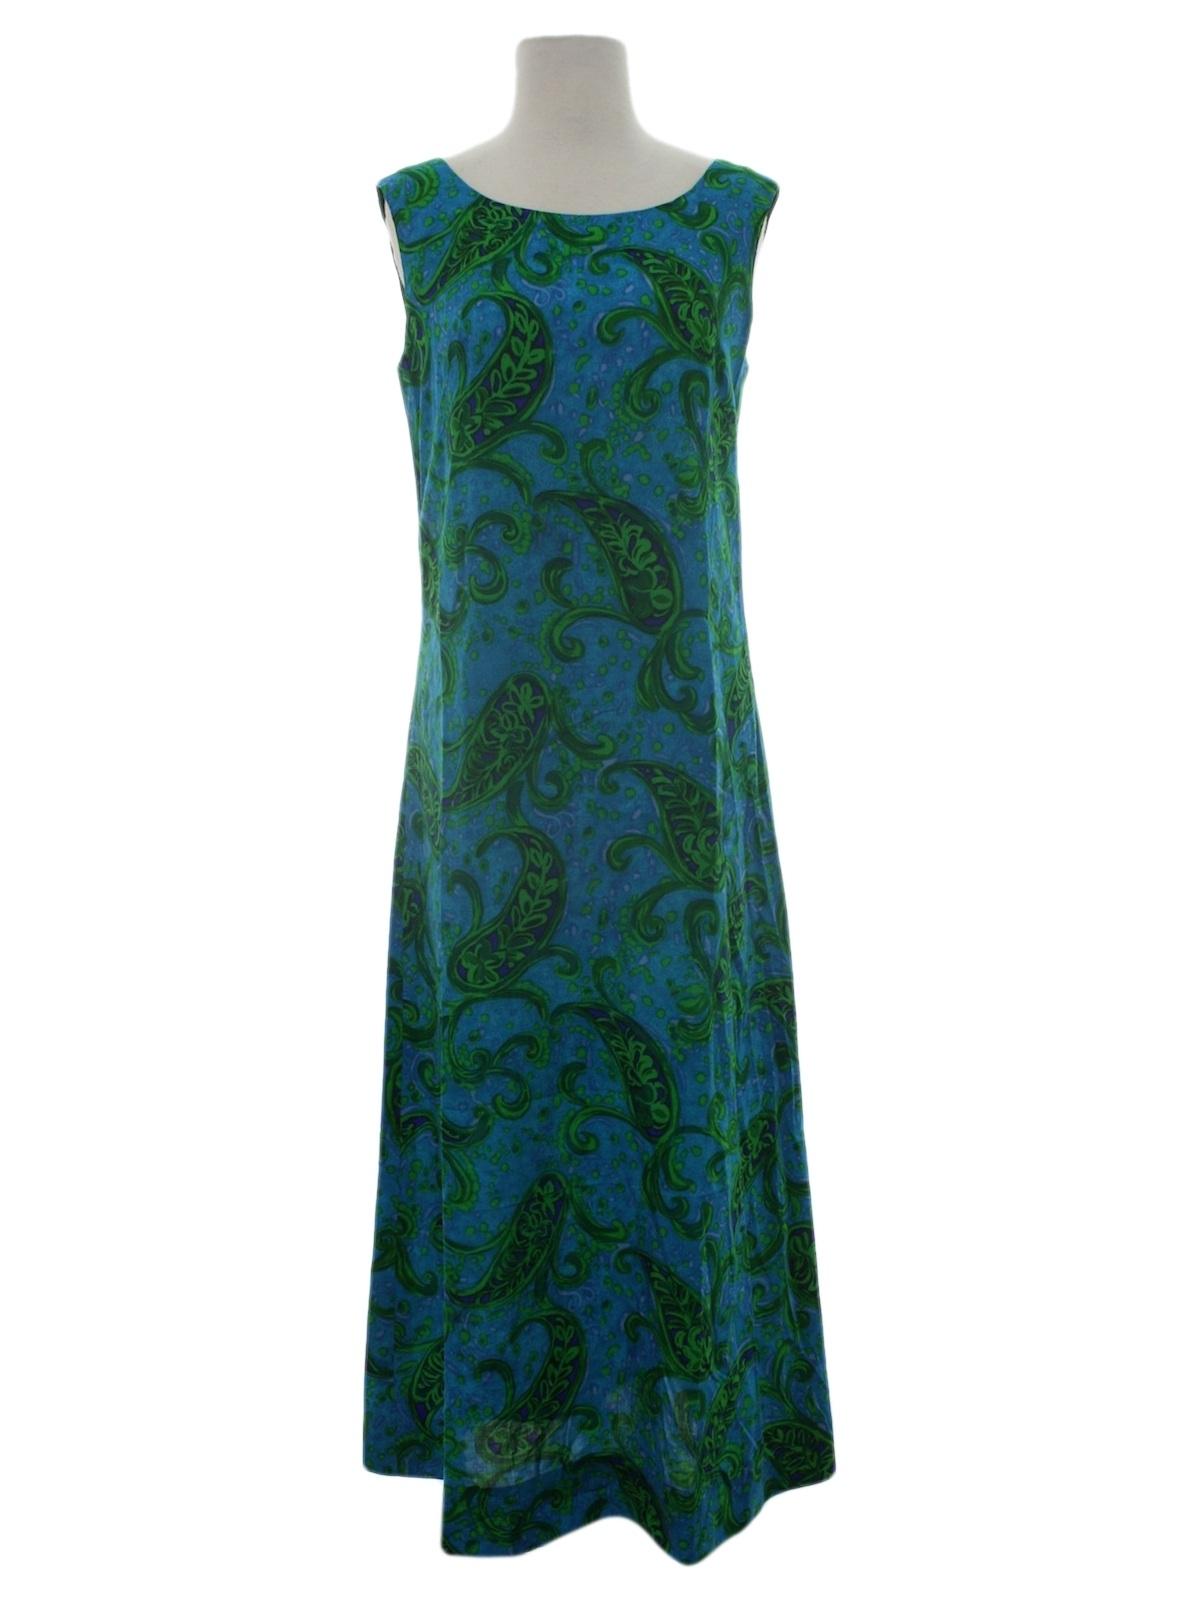 Retro 60s Hawaiian Dress (Home Sewn) : 60s -Home Sewn- Womens turquoise ...